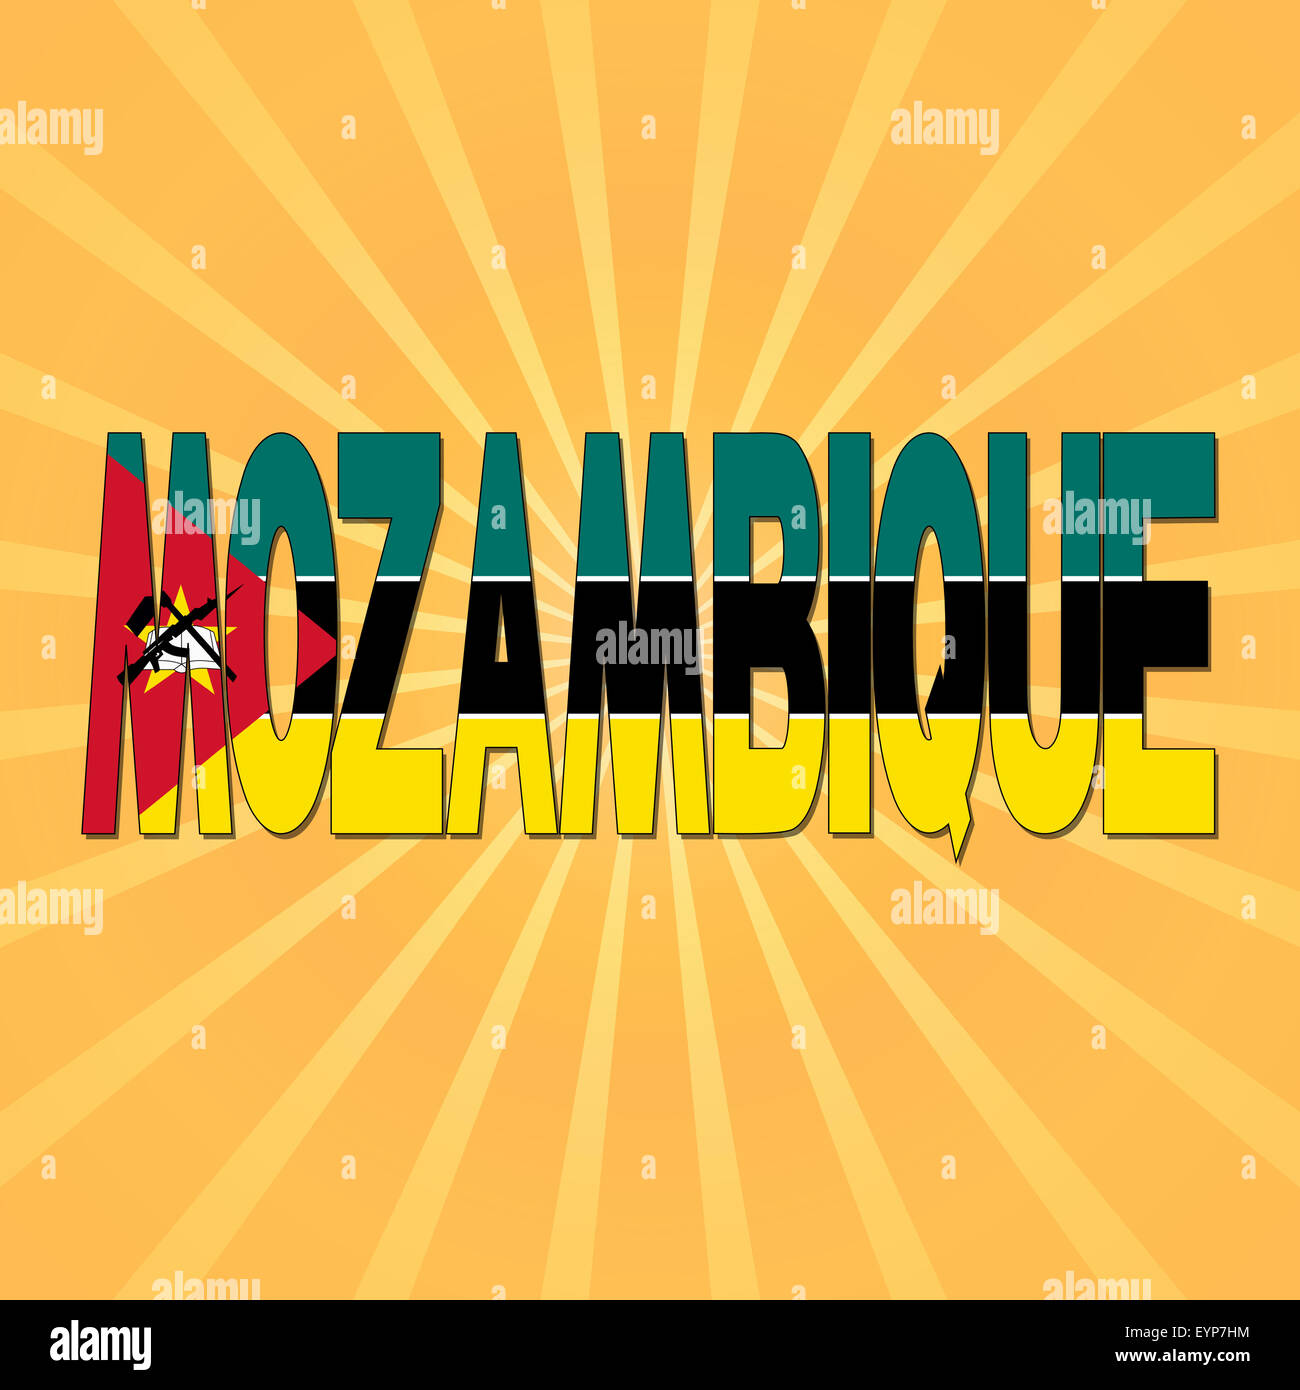 Mozambique flag text with sunburst illustration Stock Photo